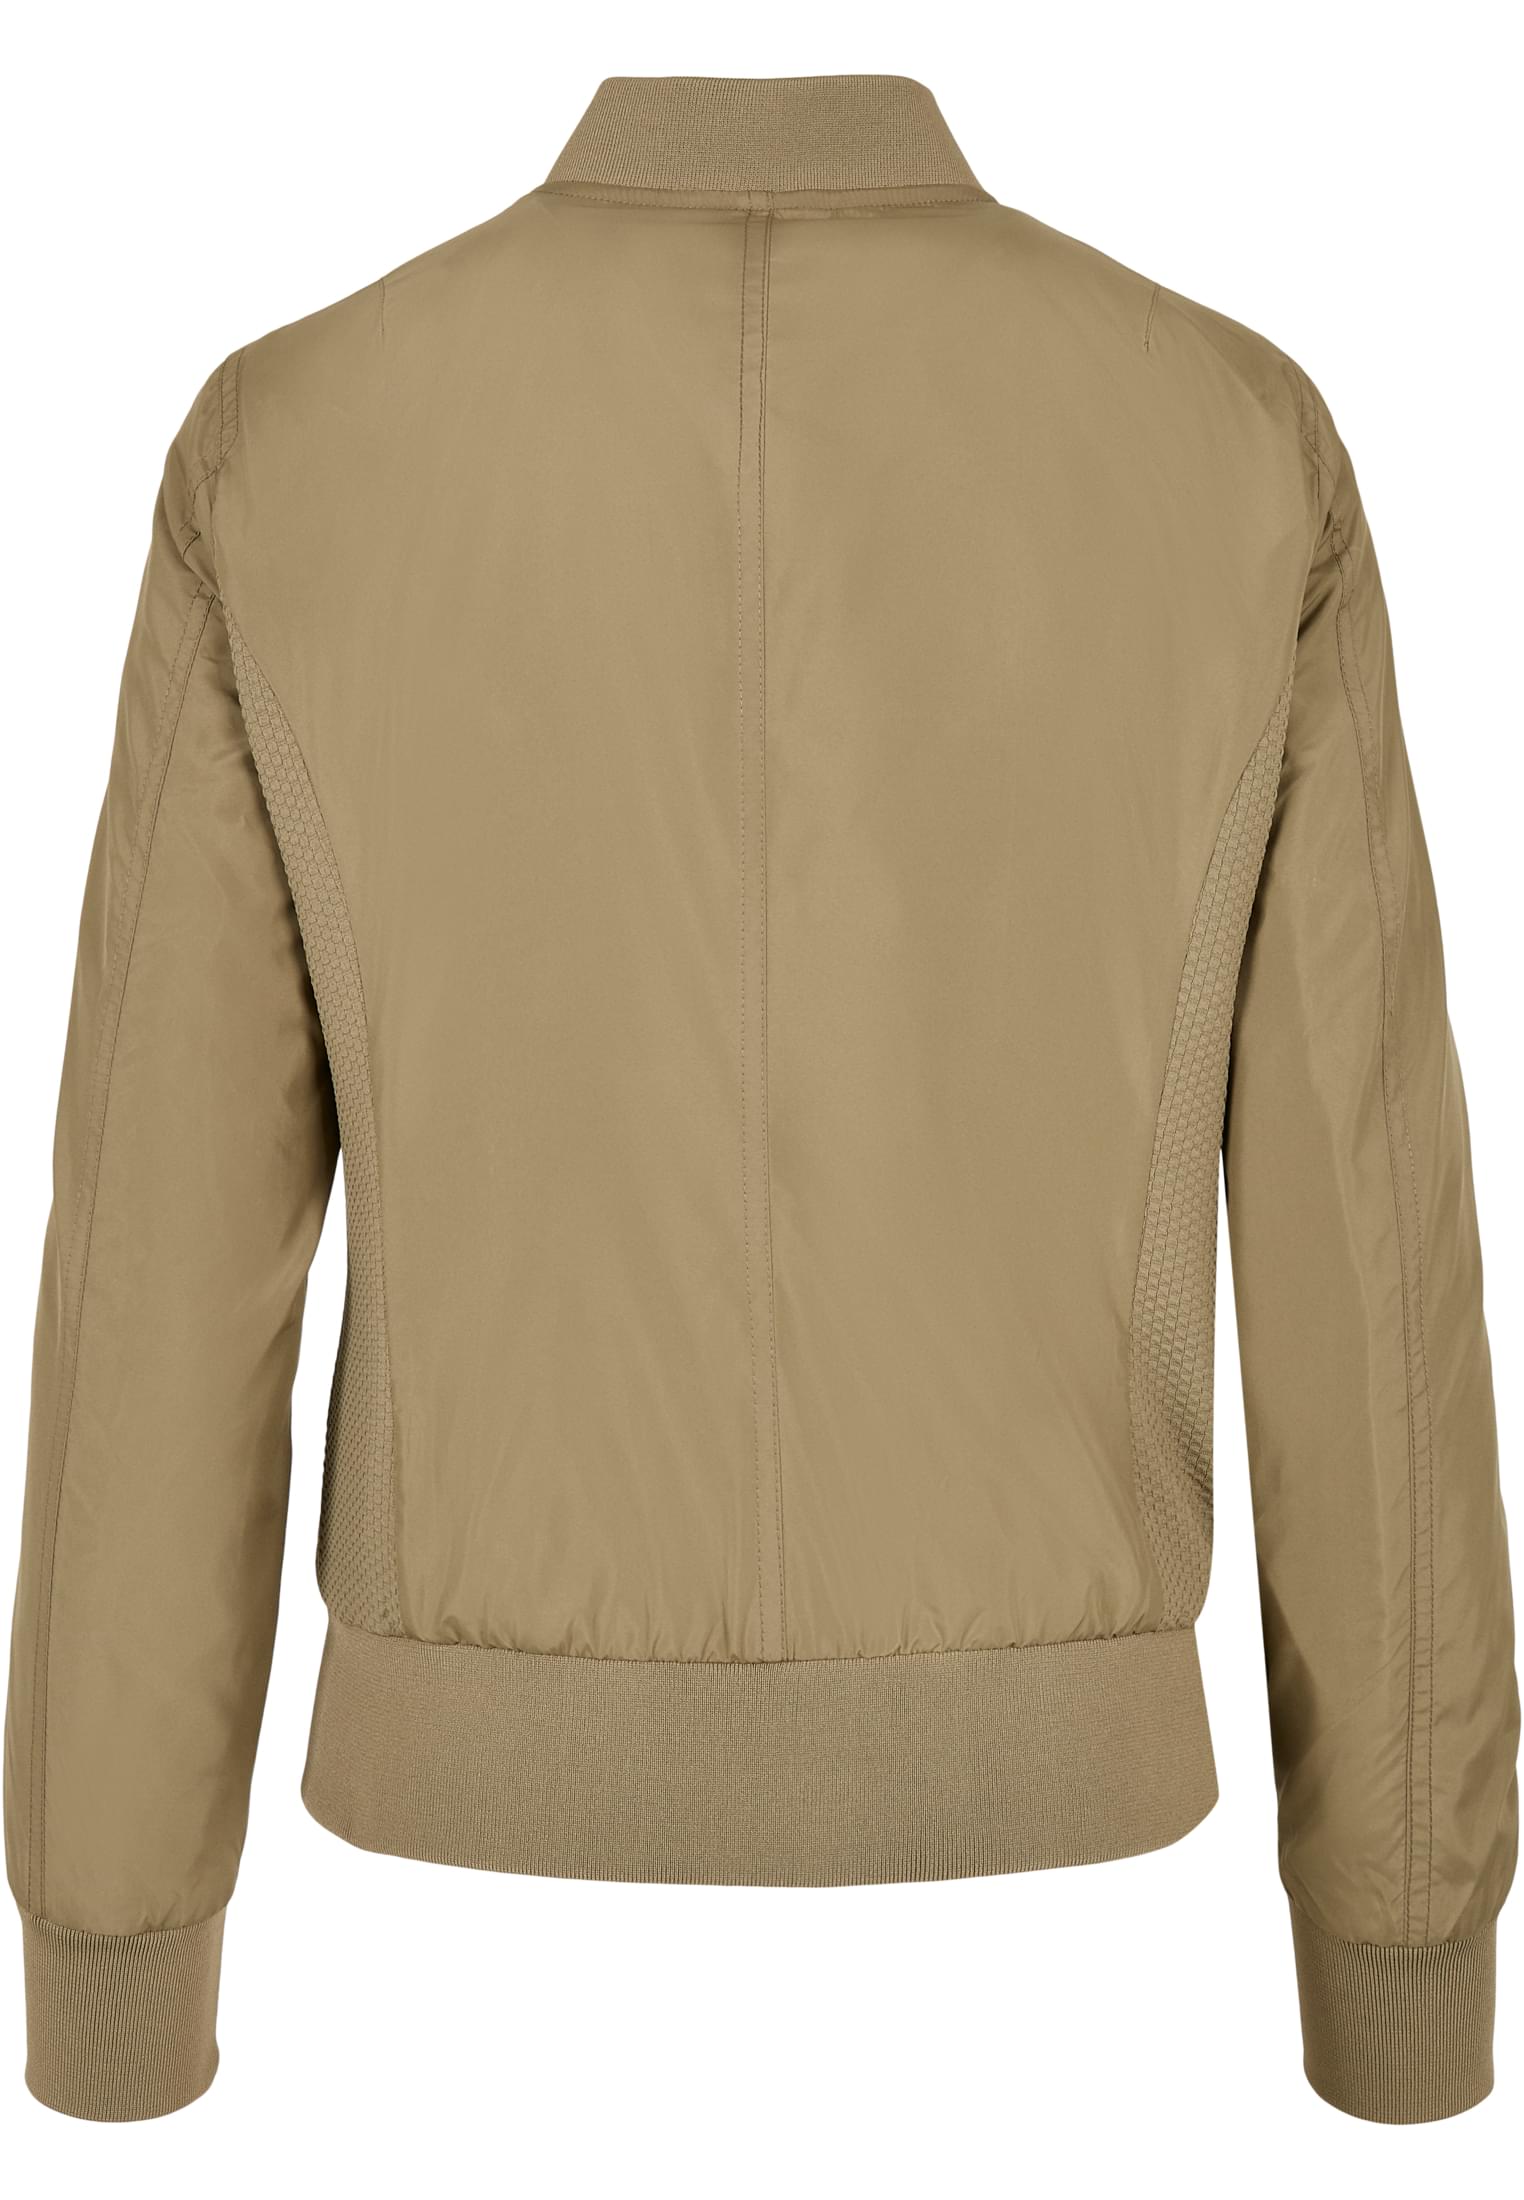 Frauen Ladies Light Bomber Jacket in Farbe khaki